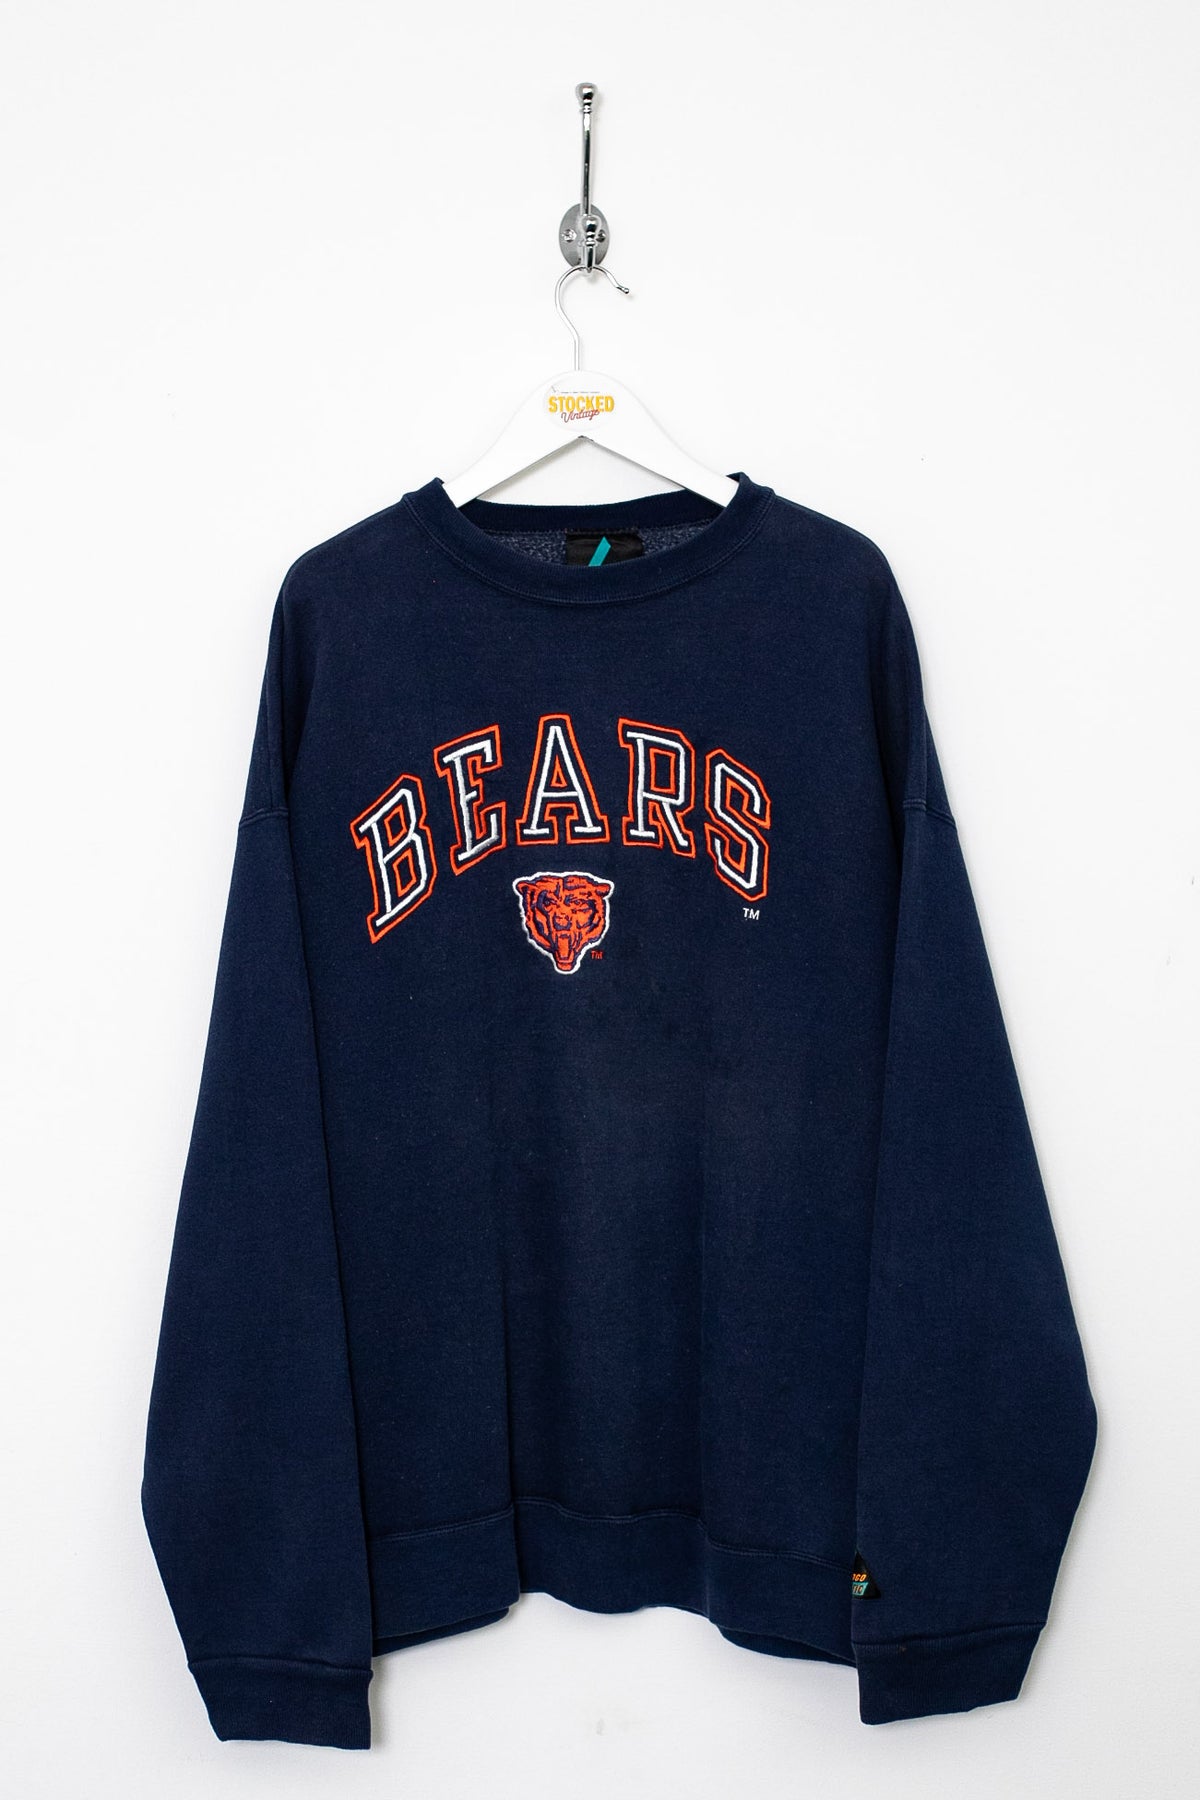 90s NFL Chicago Bears Sweatshirt (XL)